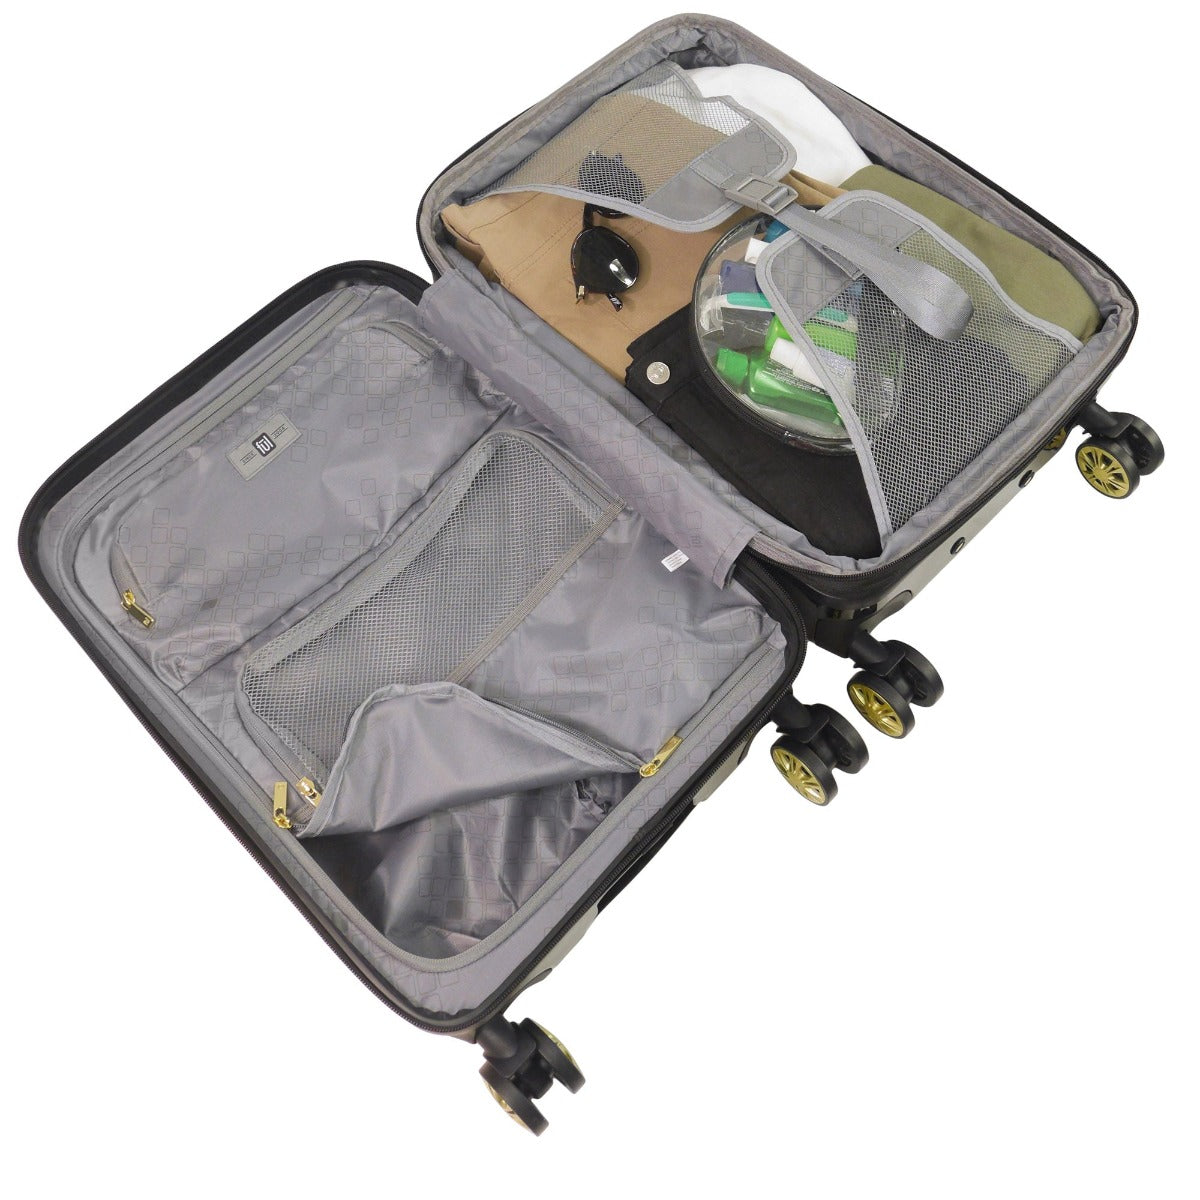 Ful Groove hardside spinner suitcase 3 Pc black luggage set interior